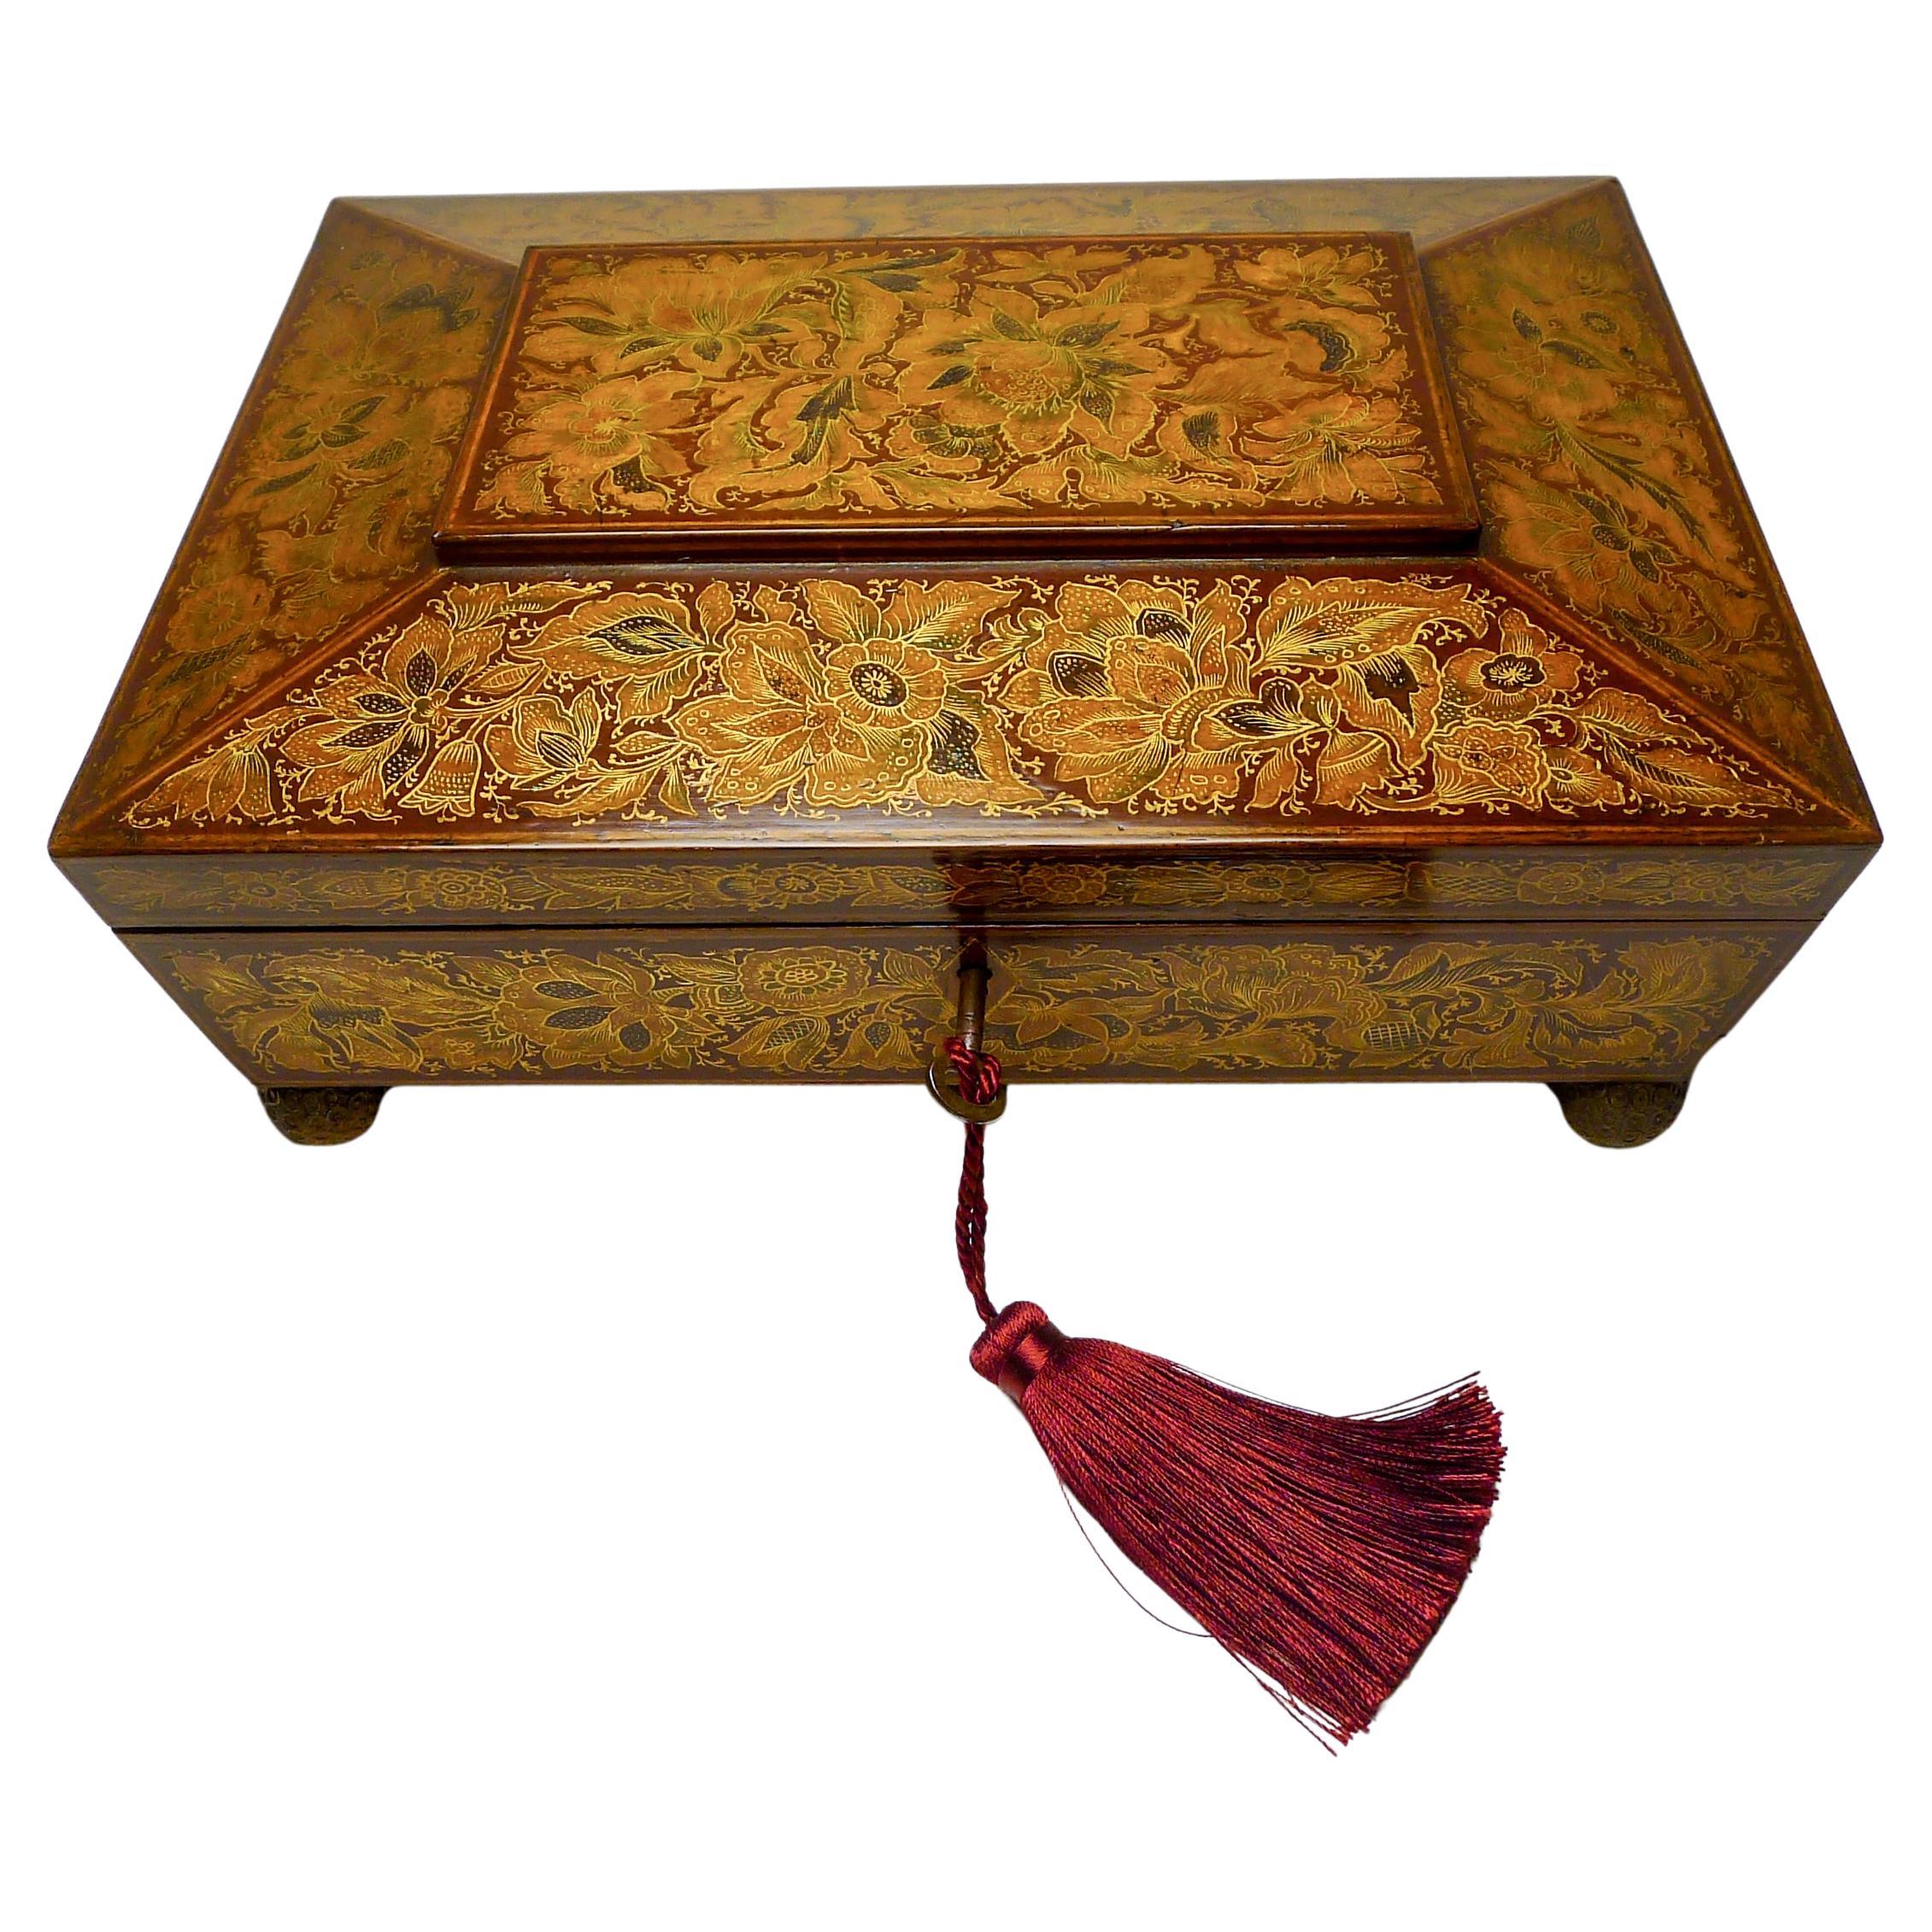 Stunning Antique English Regency Penwork Games Box c.1820 For Sale